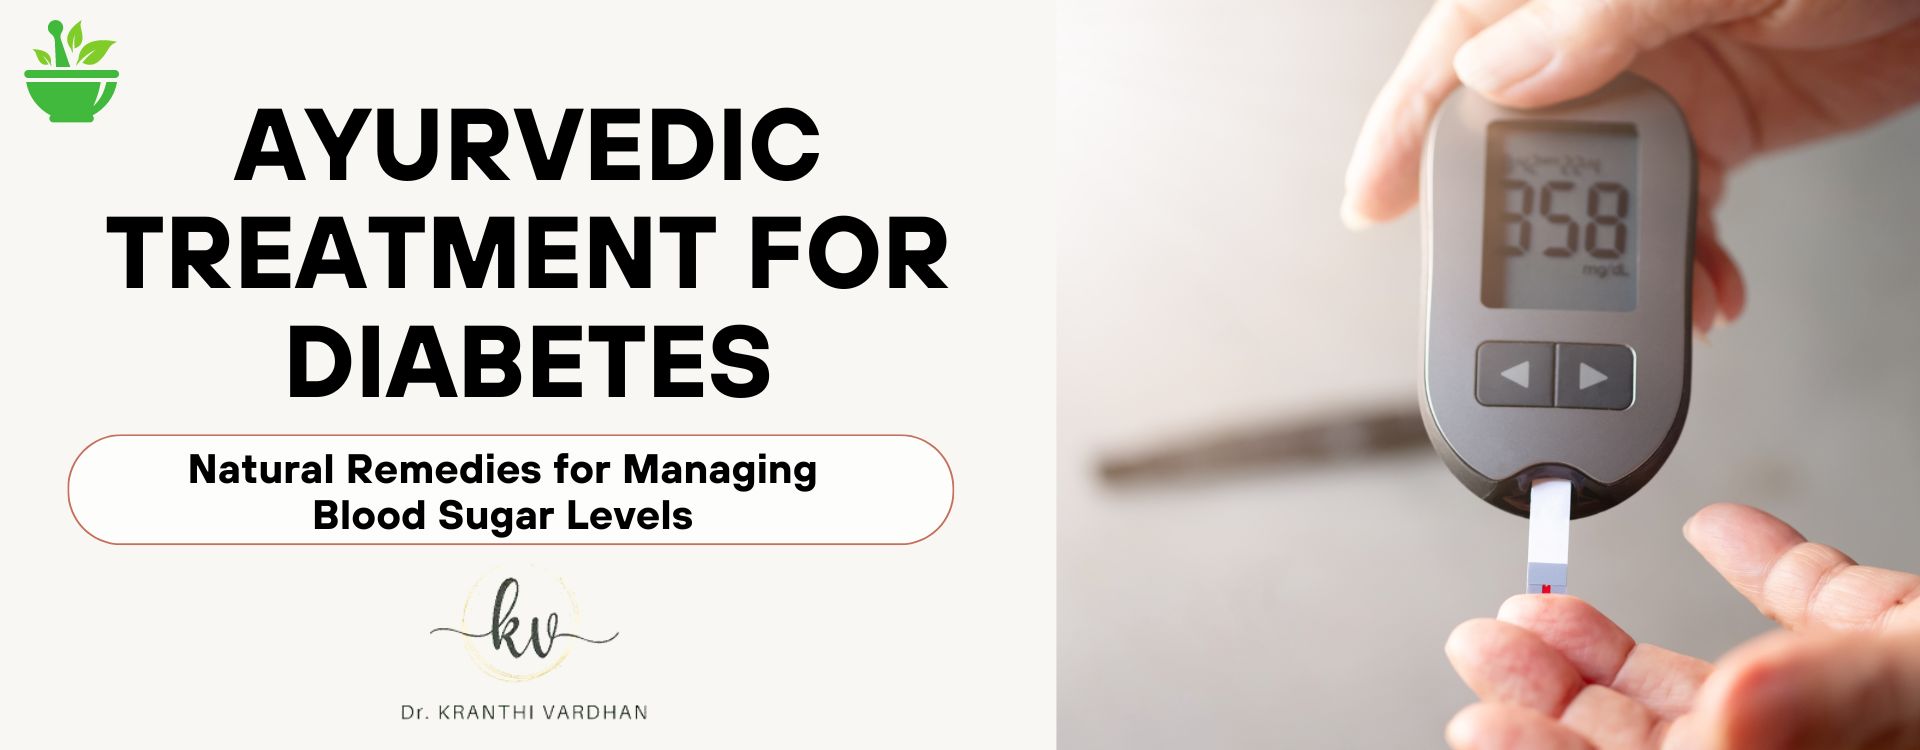 Ayurvedic Treatment for Diabetes: Natural Remedies for Managing Blood Sugar Levels